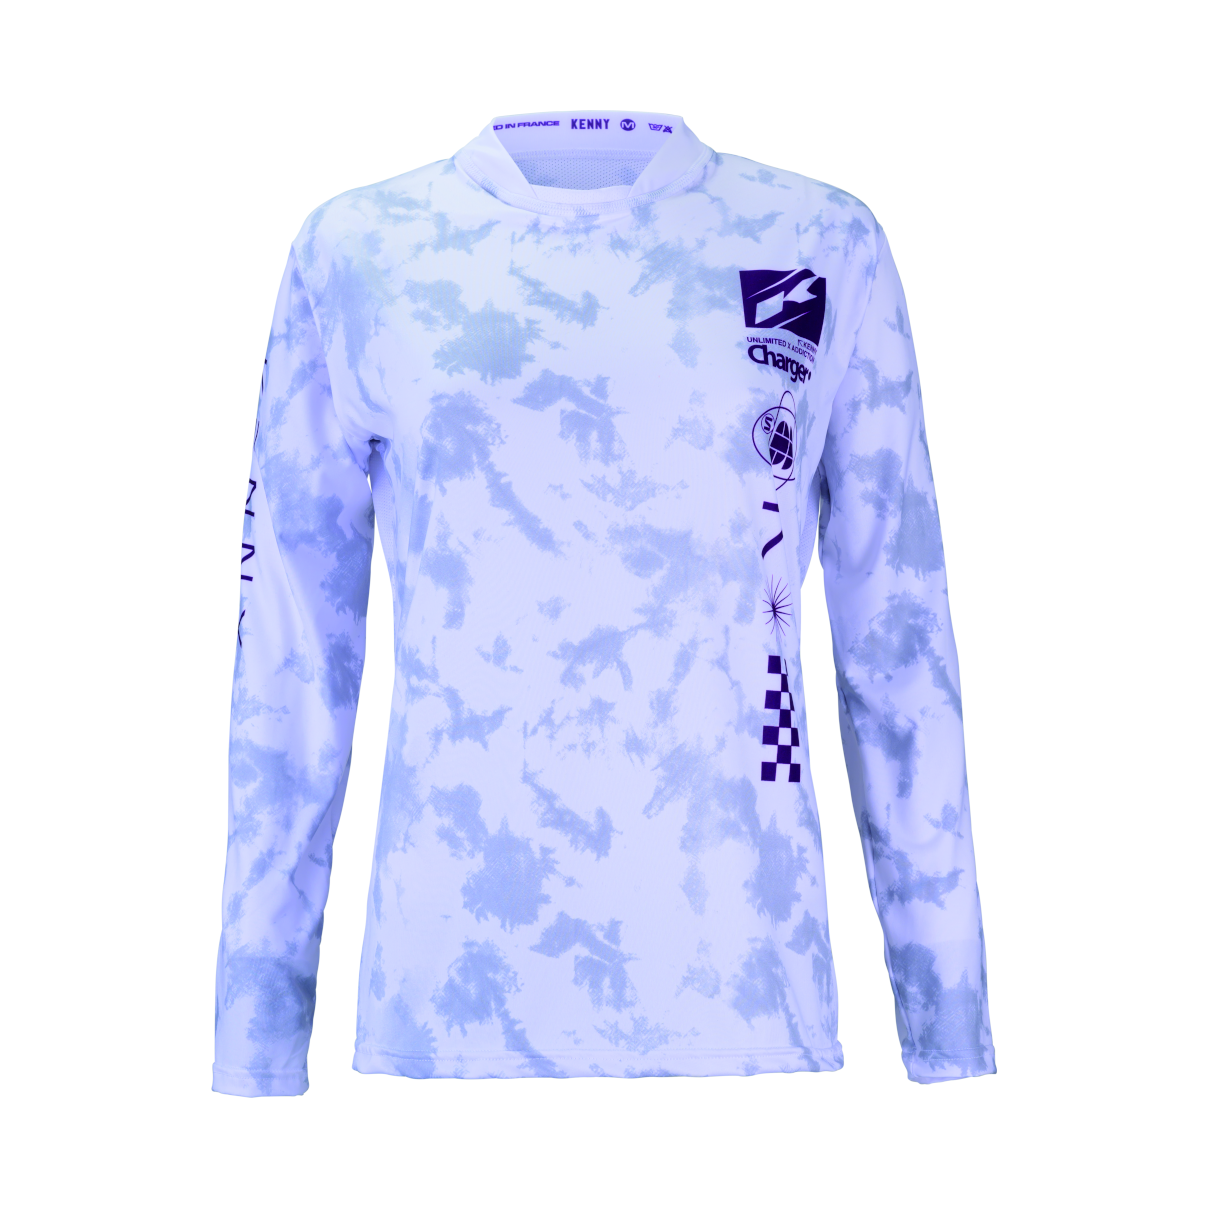 Kenny Racing Charger Women's Long Sleeve Jersey - Women's XS - Dye White - Image 1